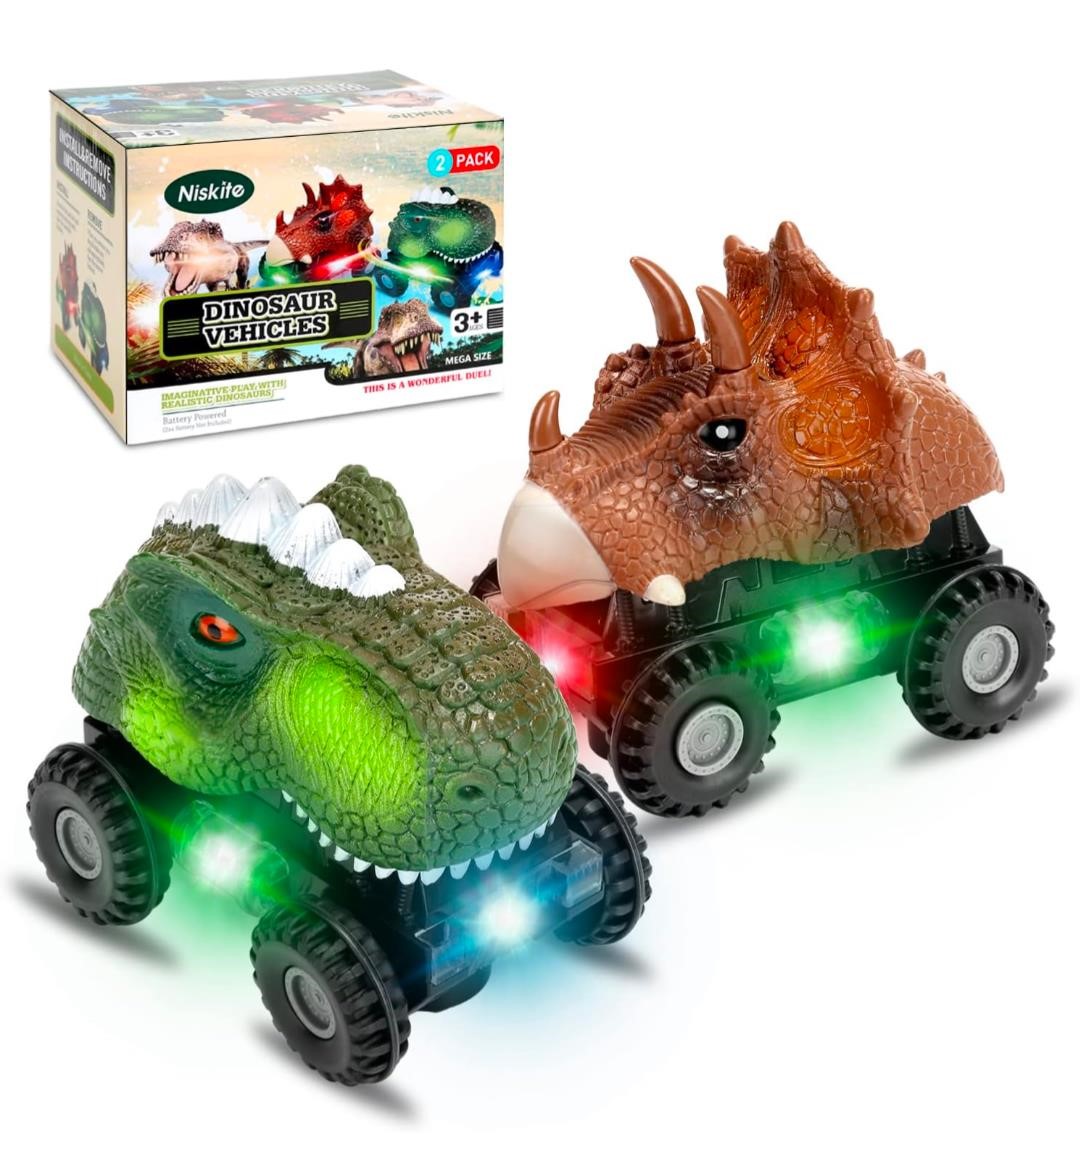 Niskite Dinosaur Toys for 2 Year Old Boy